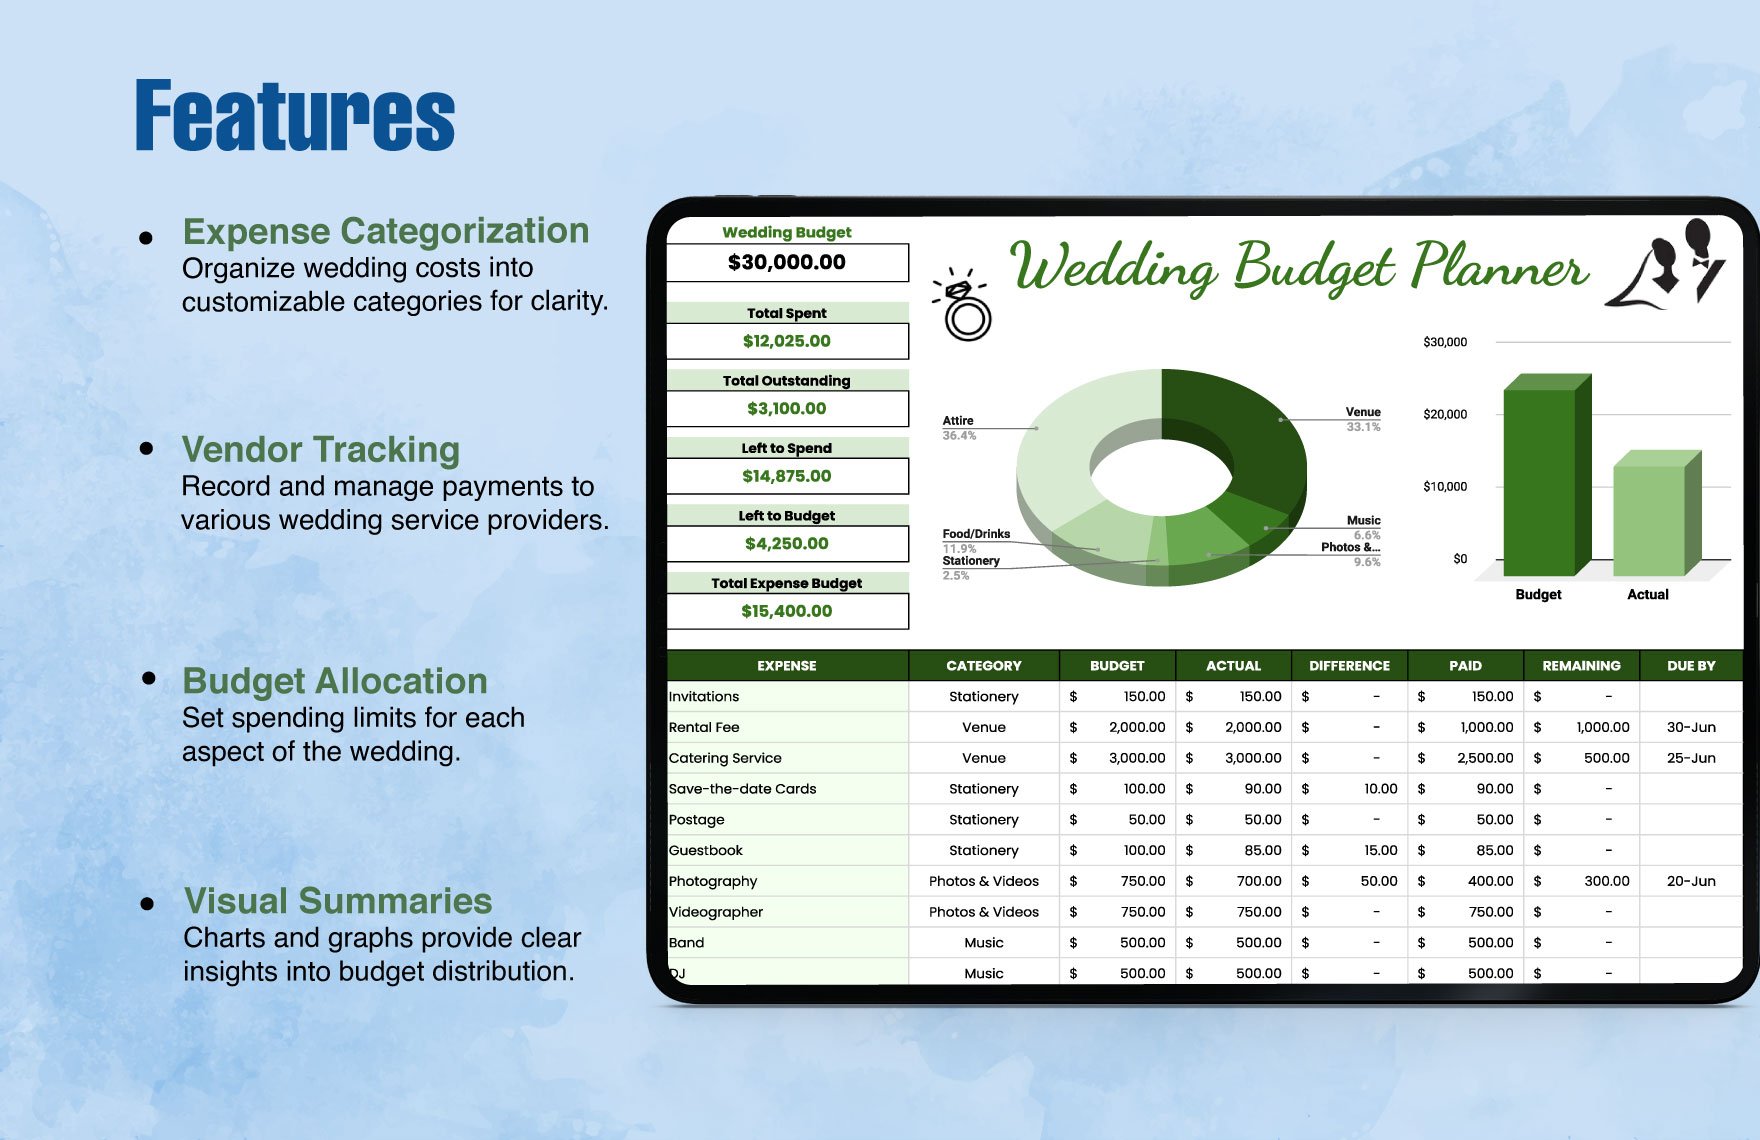 Wedding Budget Planner Template